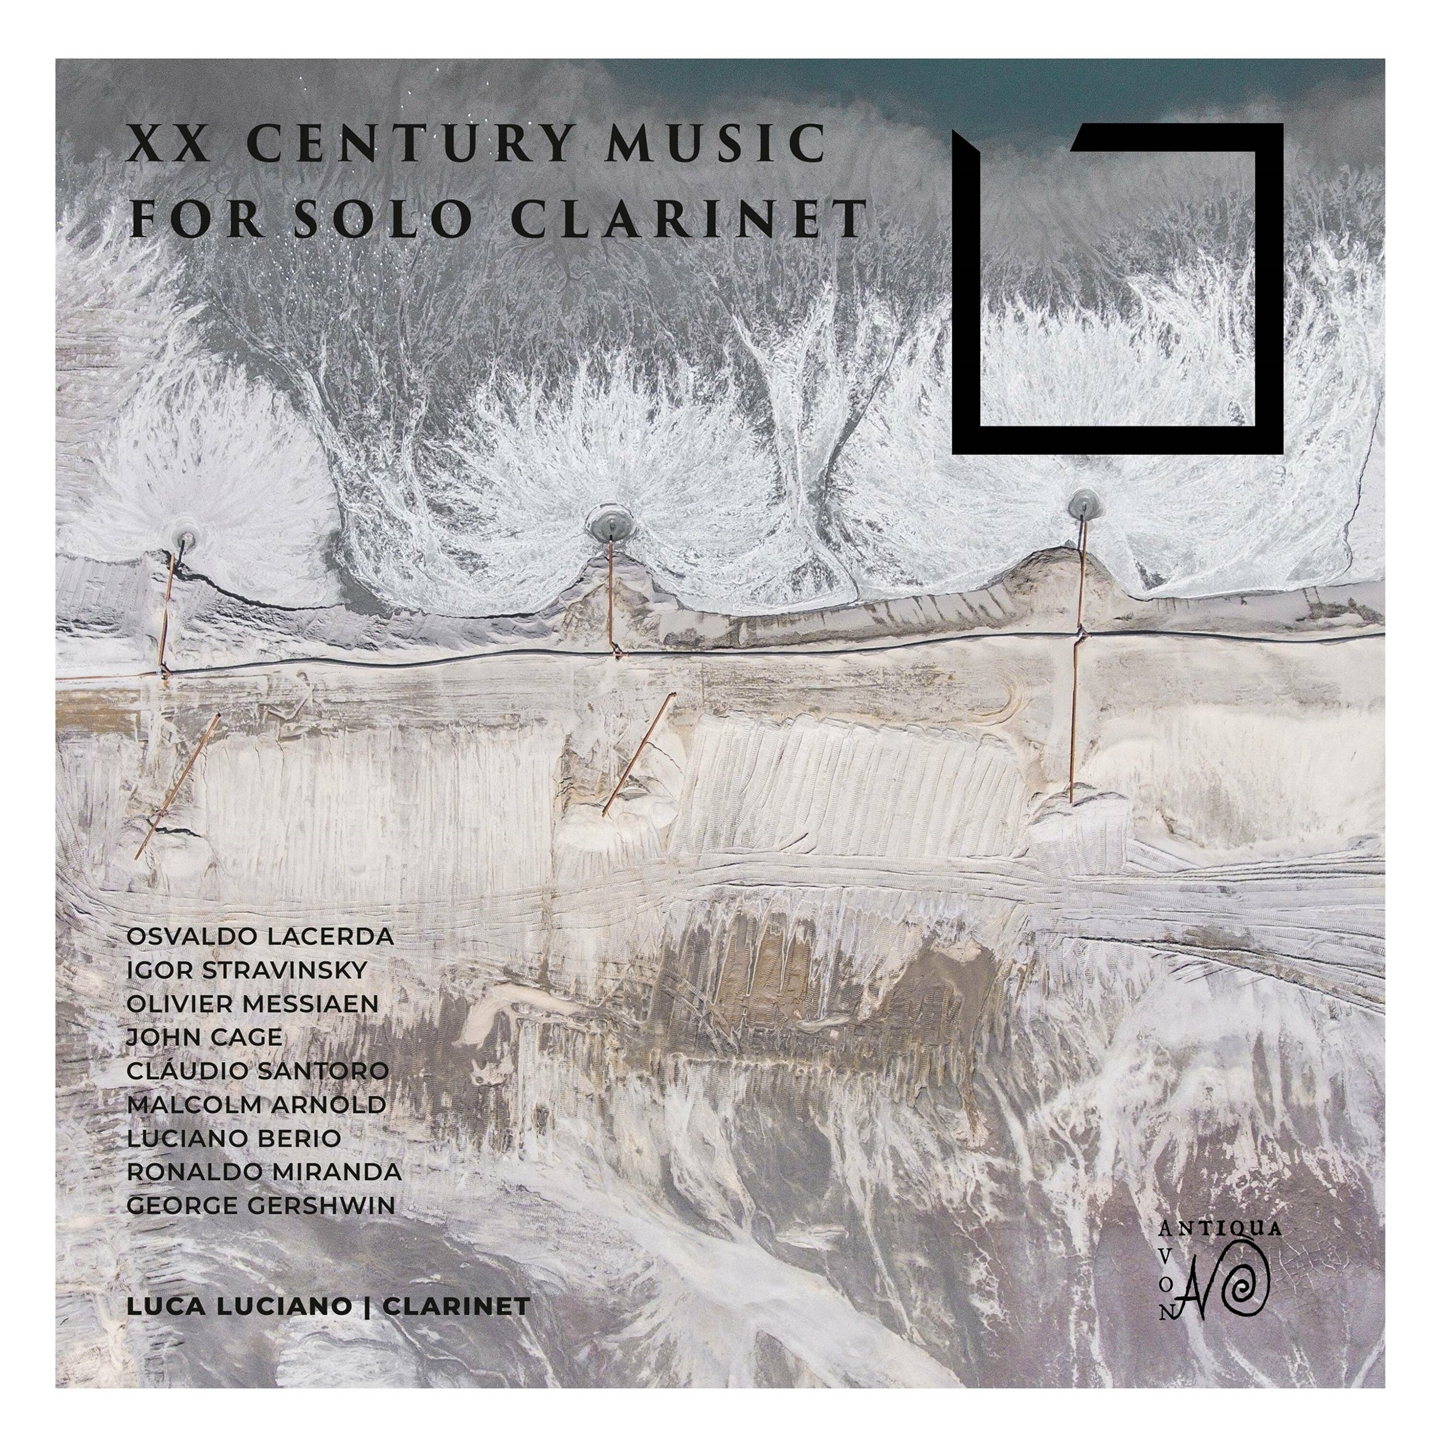 XX CENTURY MUSIC FOR SOLO CLARINET